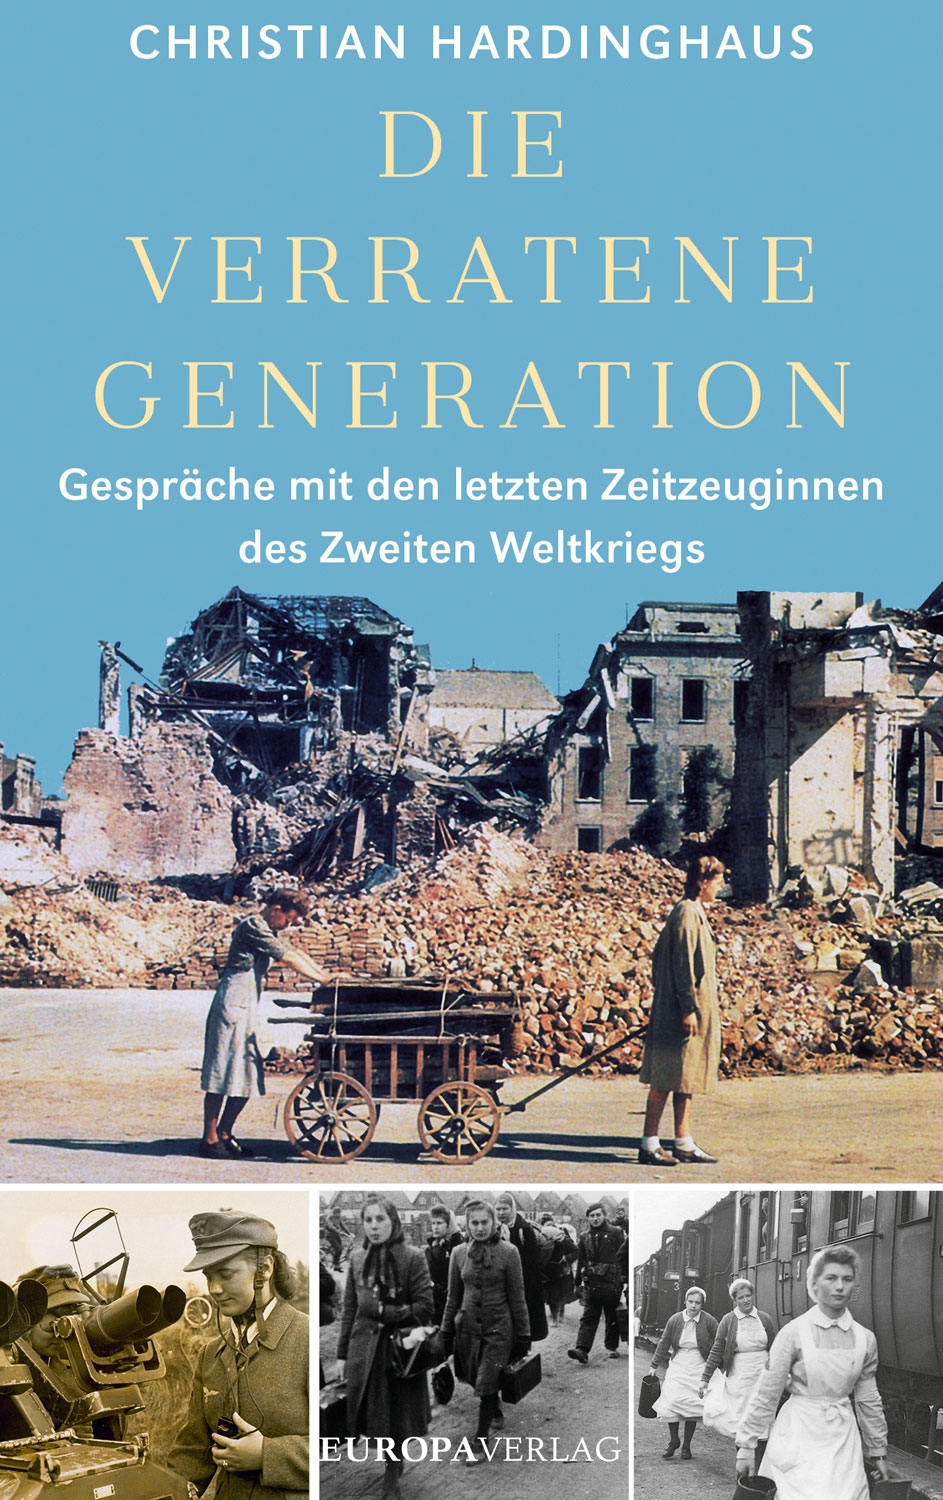 Die verdammte Generation by Christian Hardinghaus